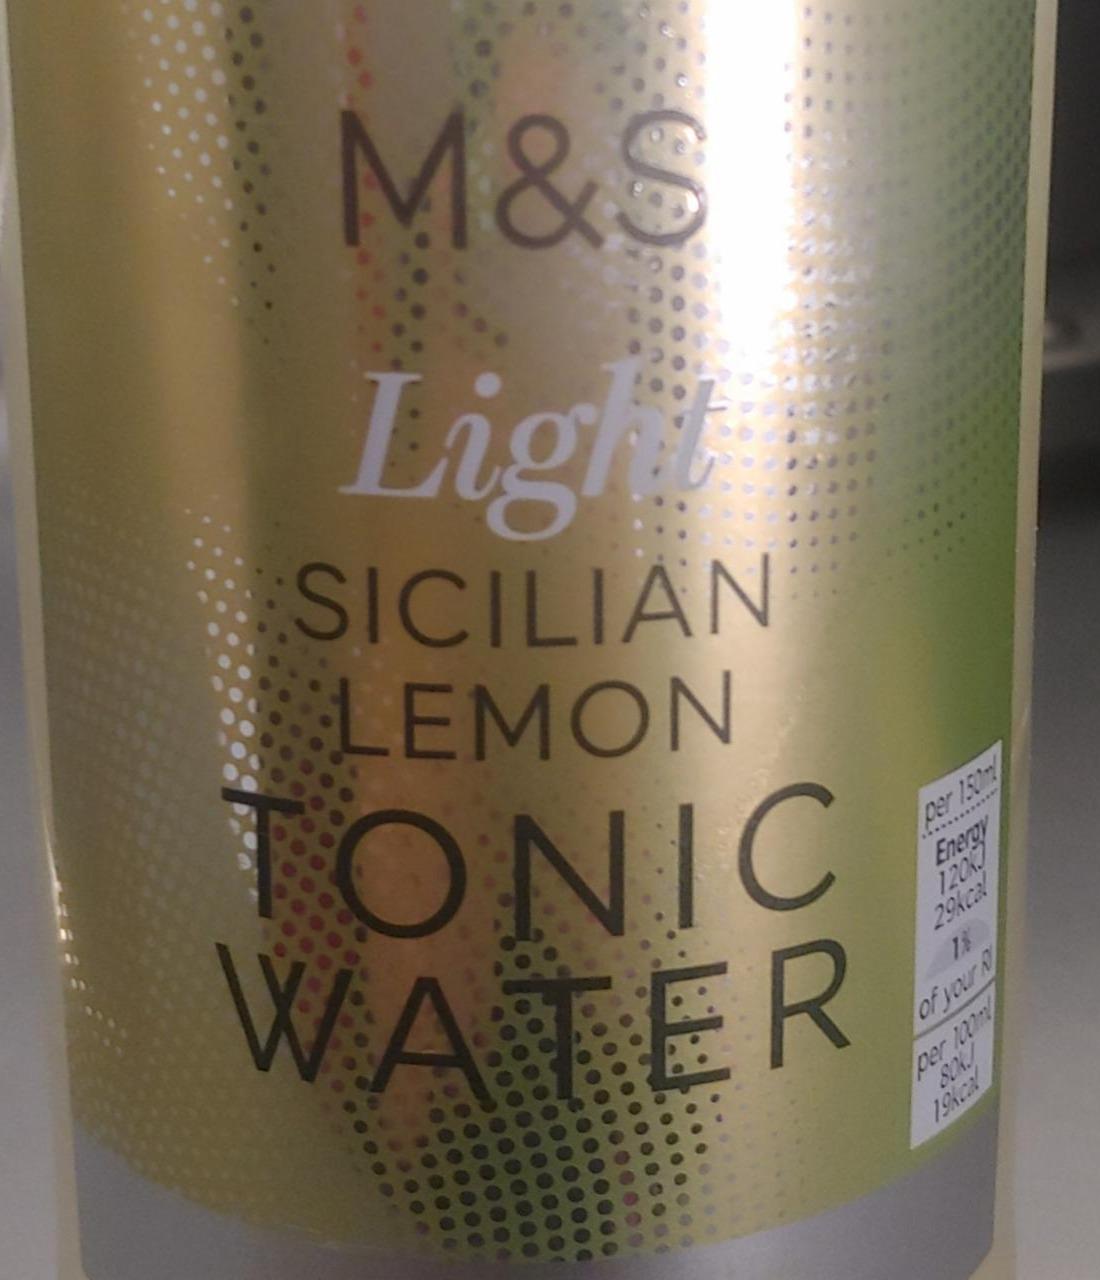 Fotografie - Light Sicilian Lemon Tonic Water M&S